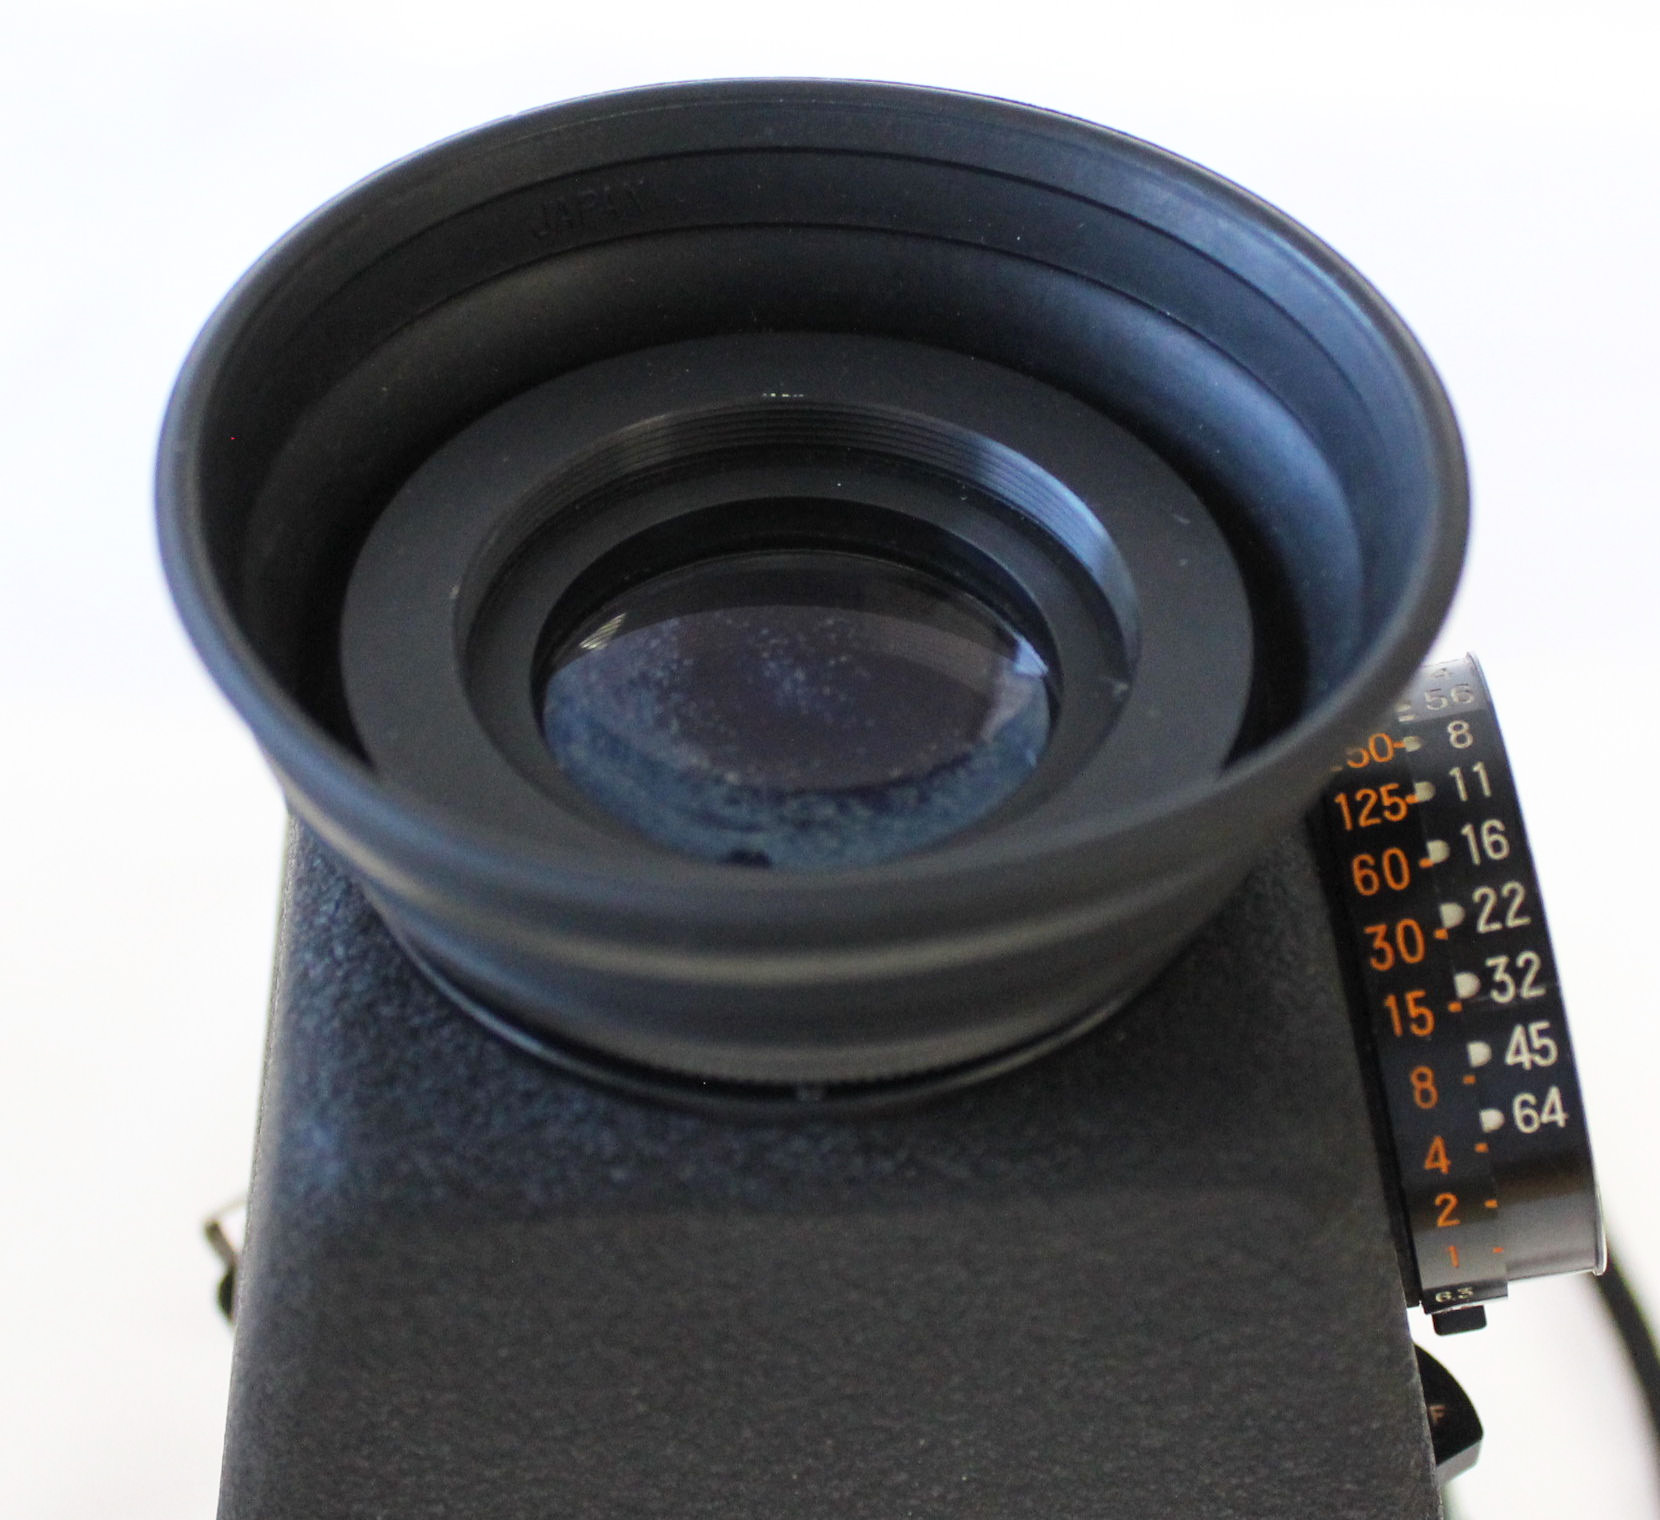  Mamiya C220 Pro TLR Medium Format Camera with 80mm F2.8 and CdS Magnifying Hood from Japan Photo 16